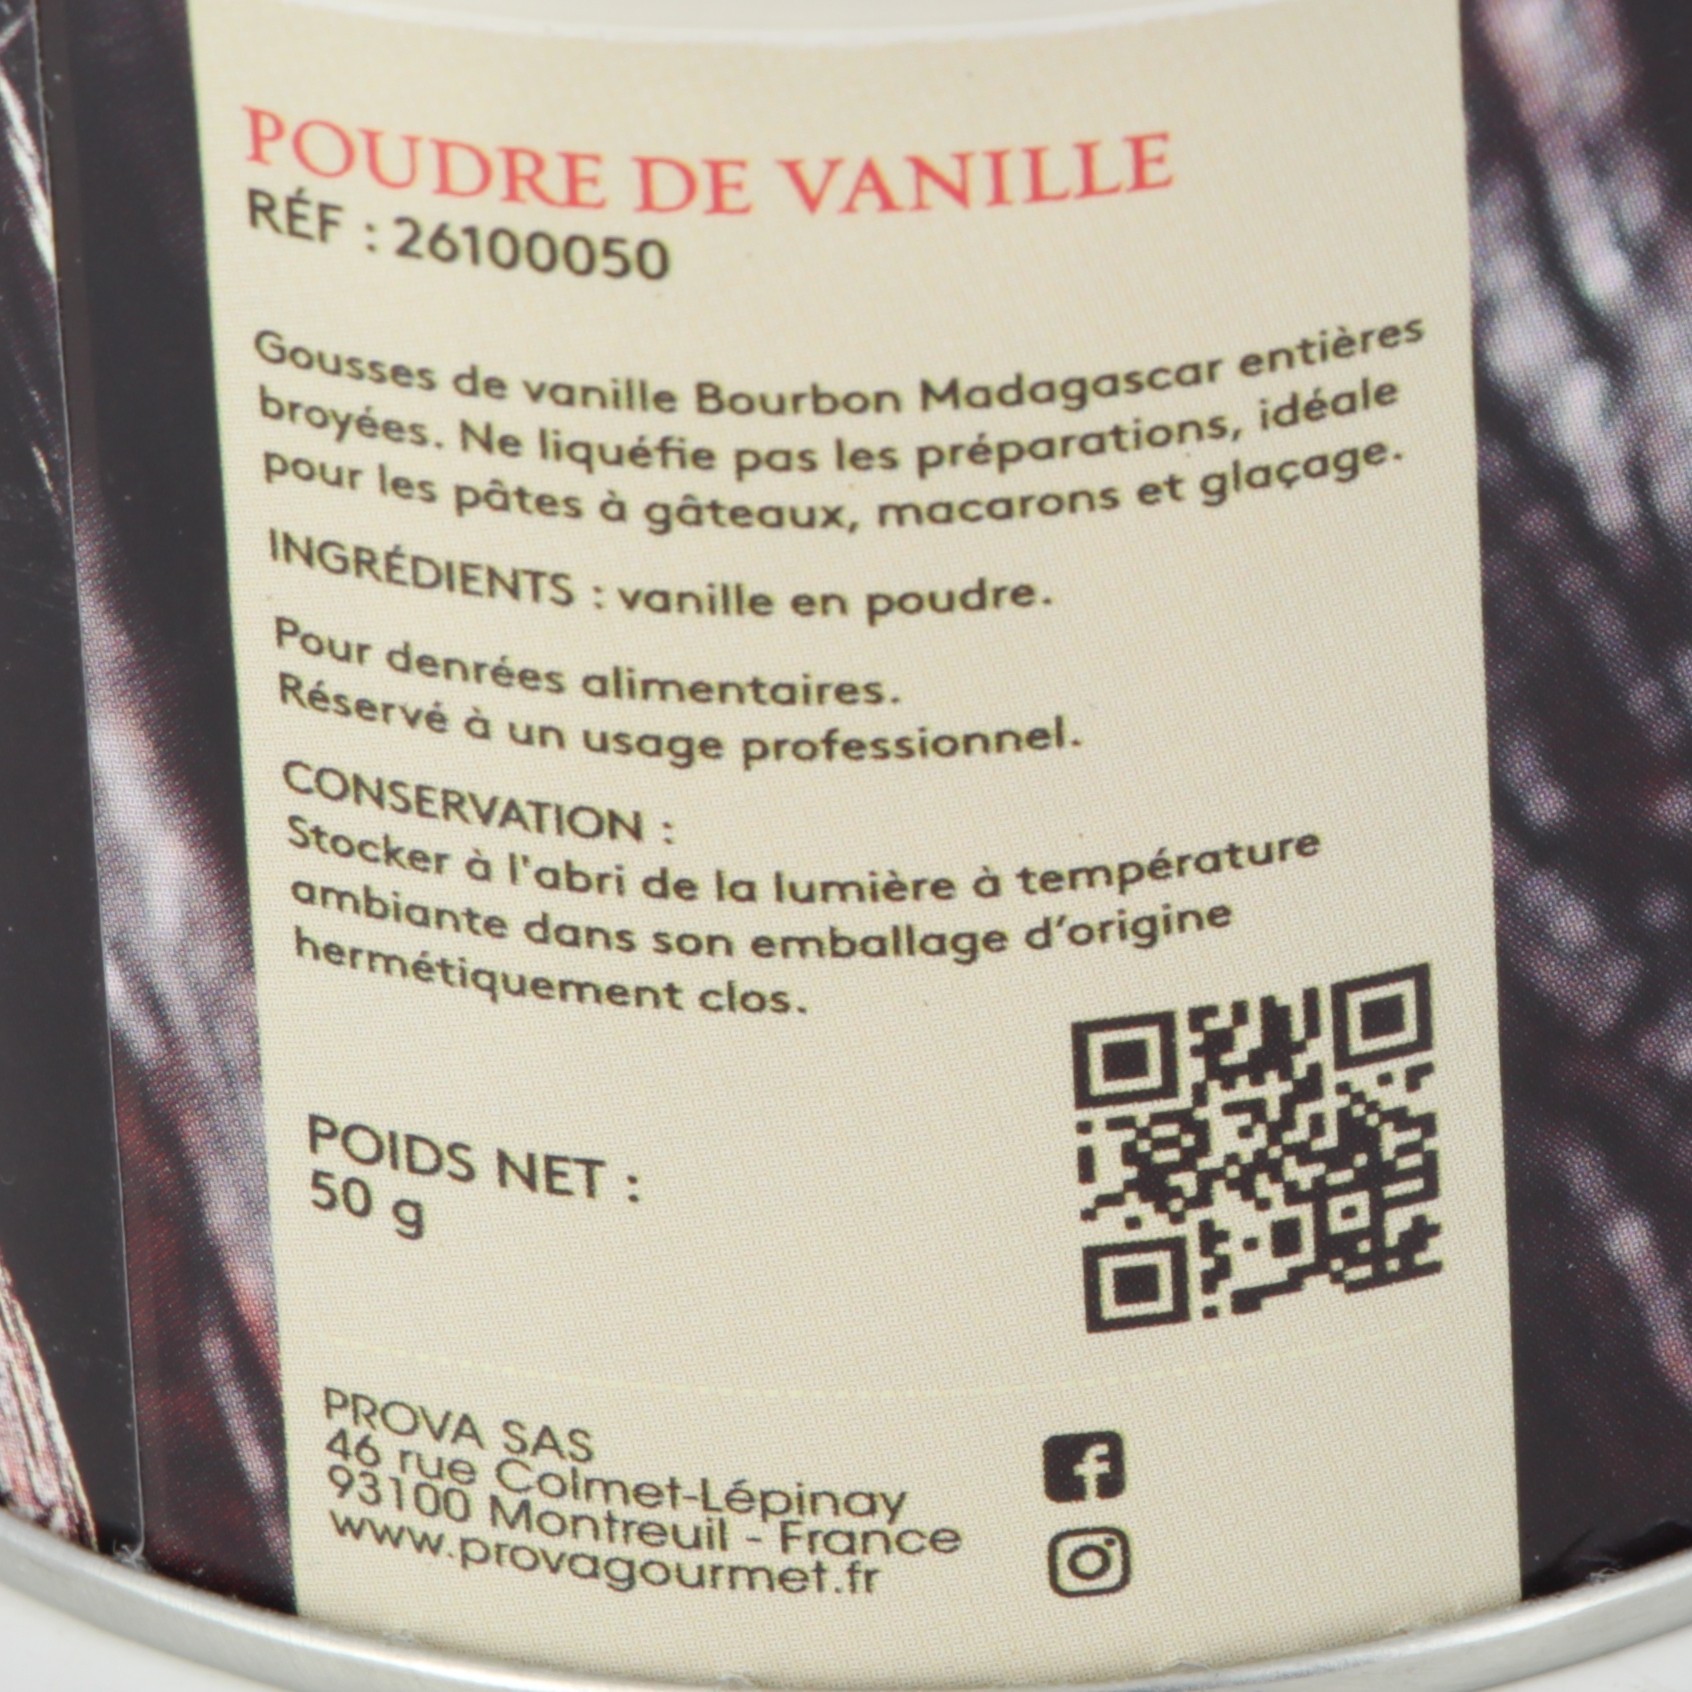 Pâte de vanille Bourbon - marque Prova